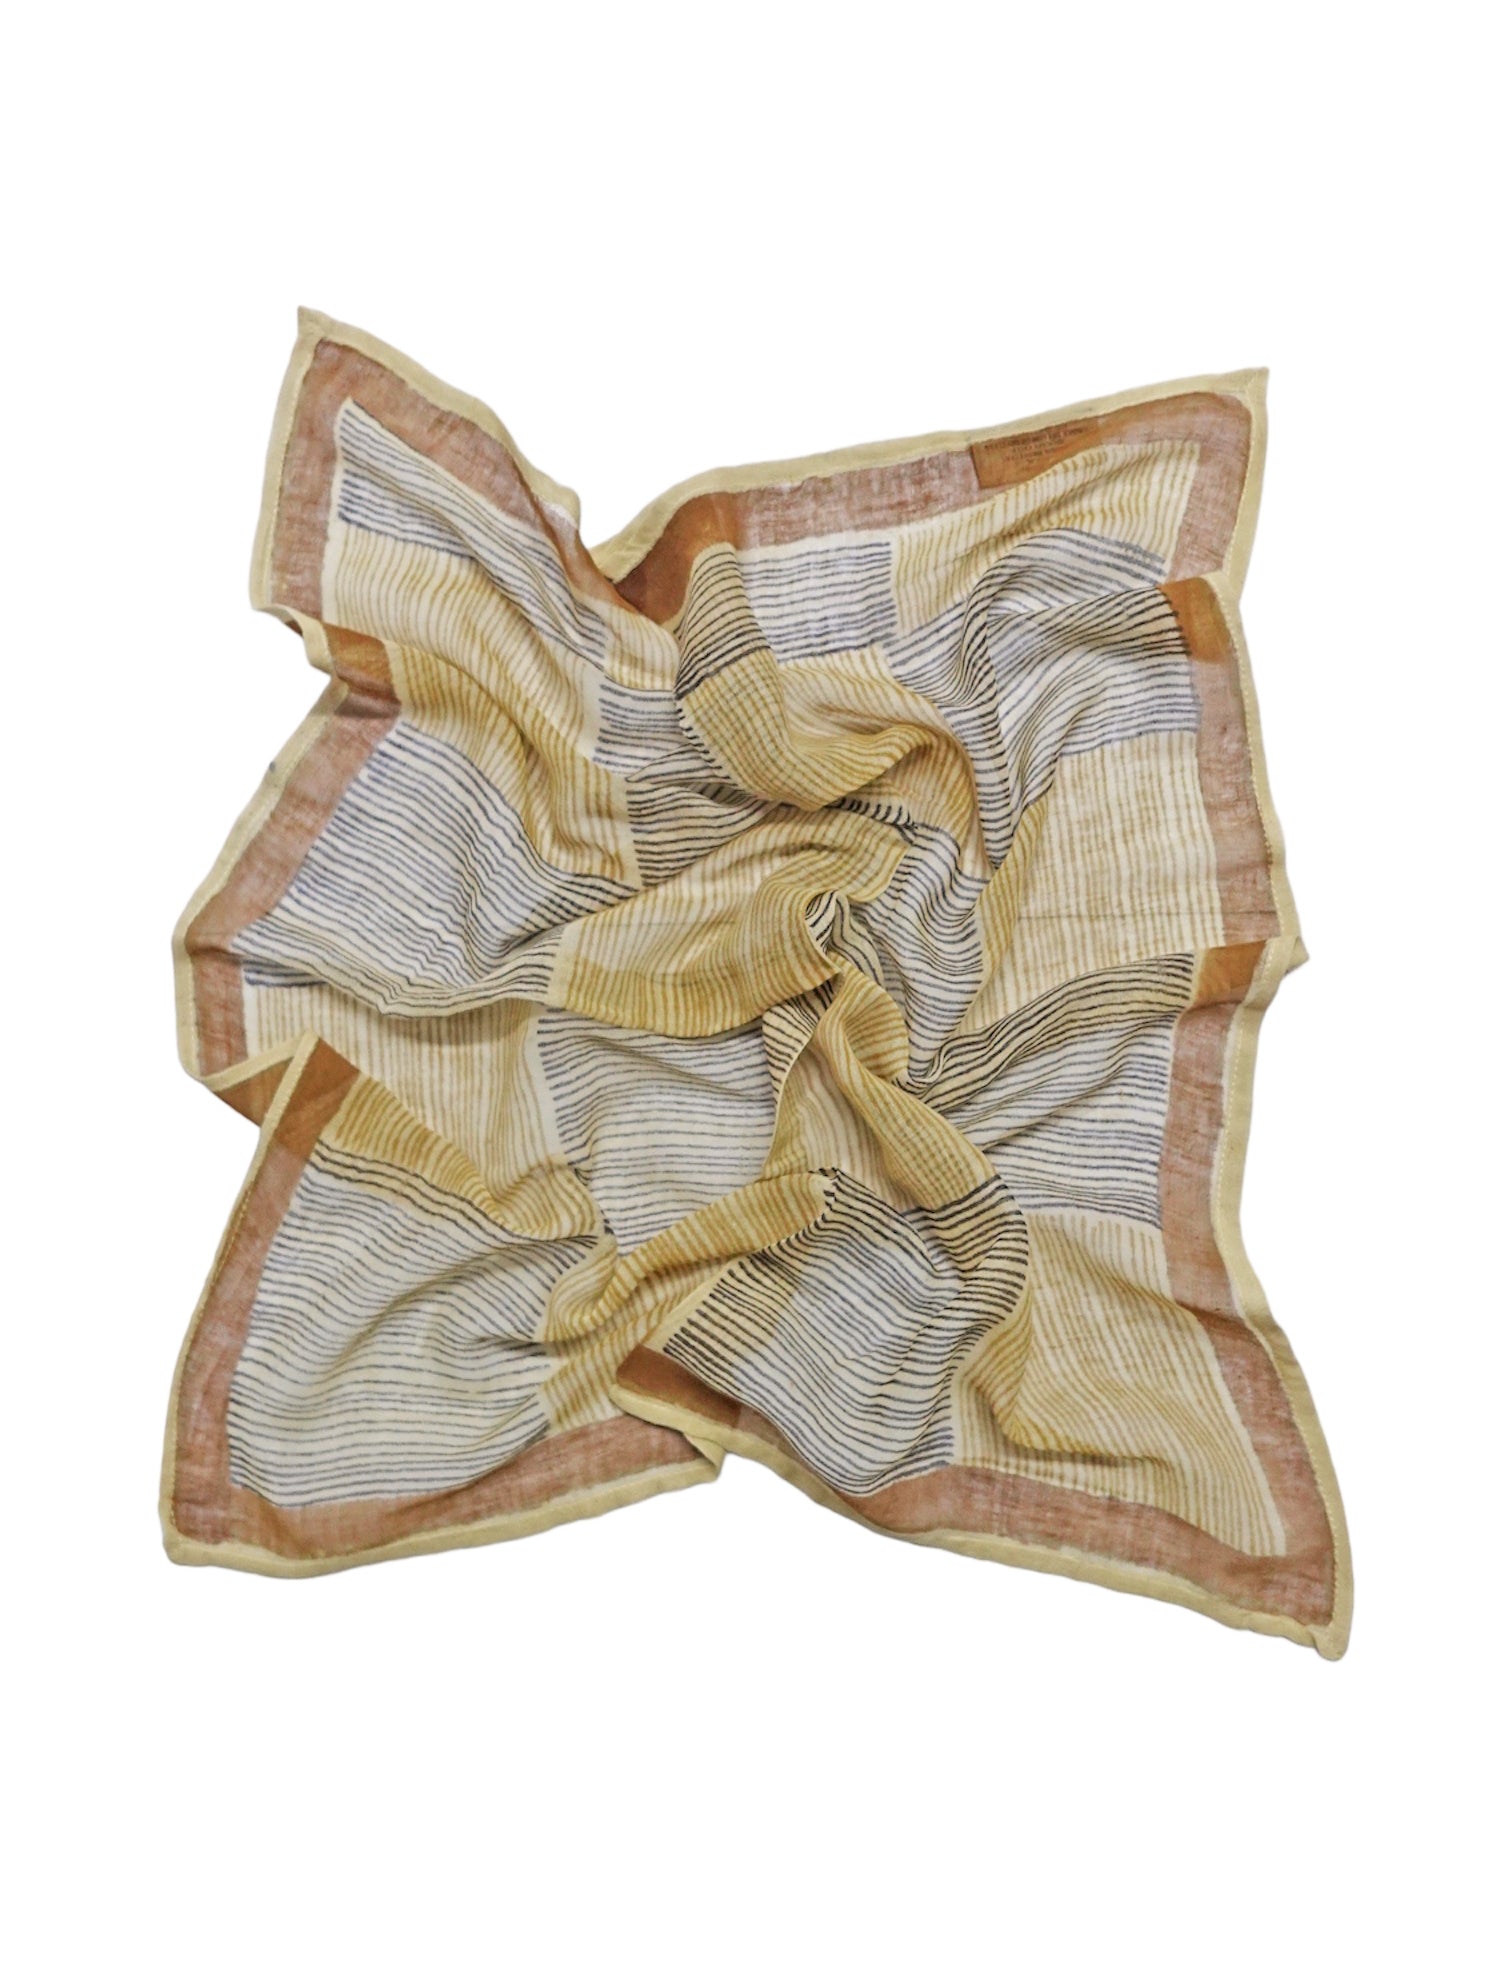 Vertical and horizontal striped block printed Savanna bandana laid flat against a white background